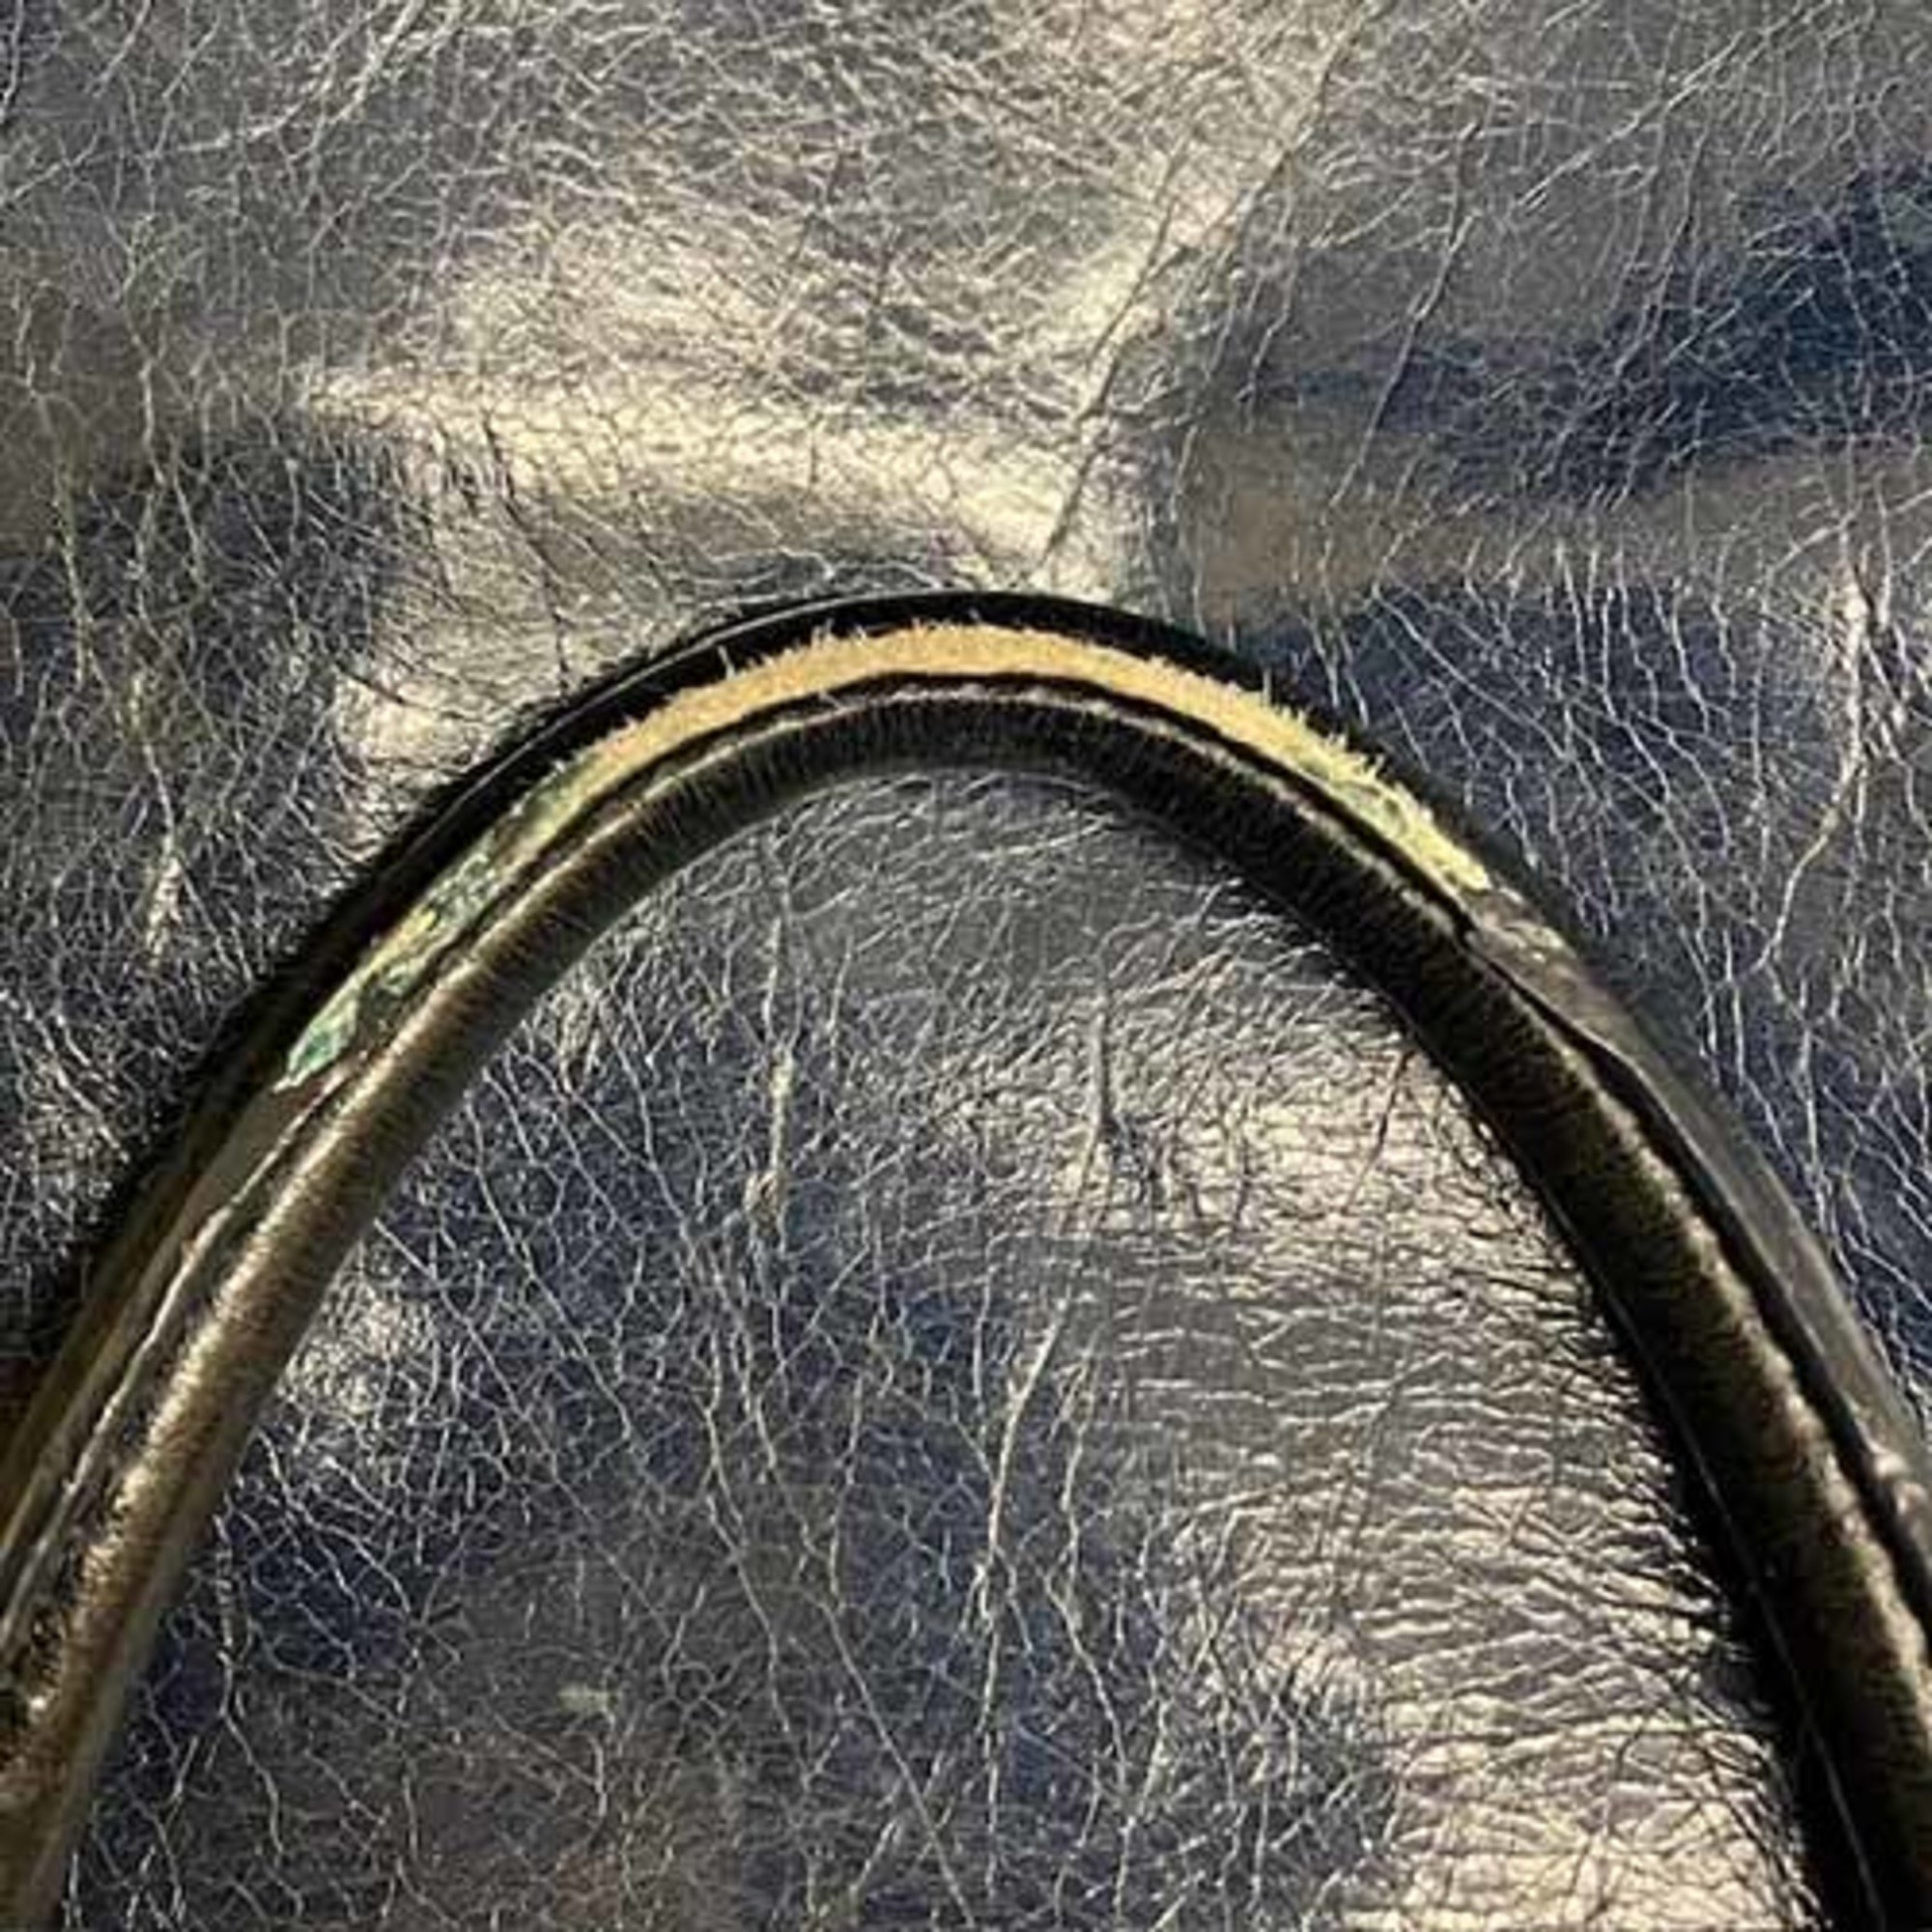 PRADA Shoulder Bag Tote Navy Blue Leather Ladies Fashion BN2324 IT46VE4PZ1IO